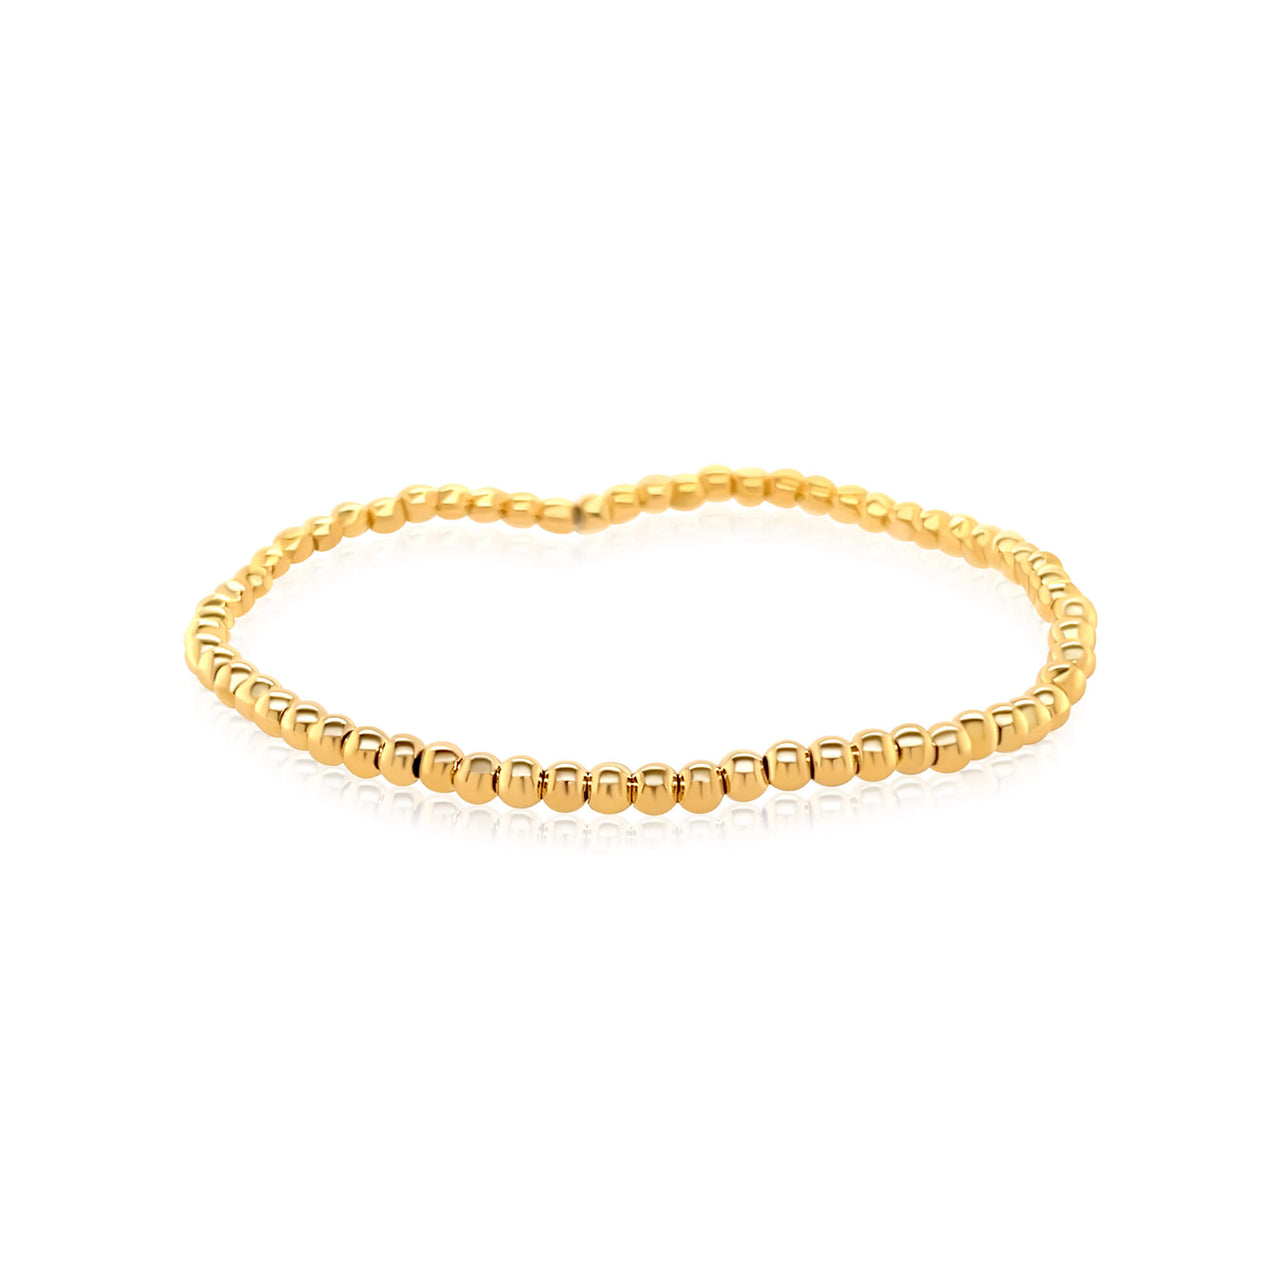 Tiny Gold Bead Bracelet